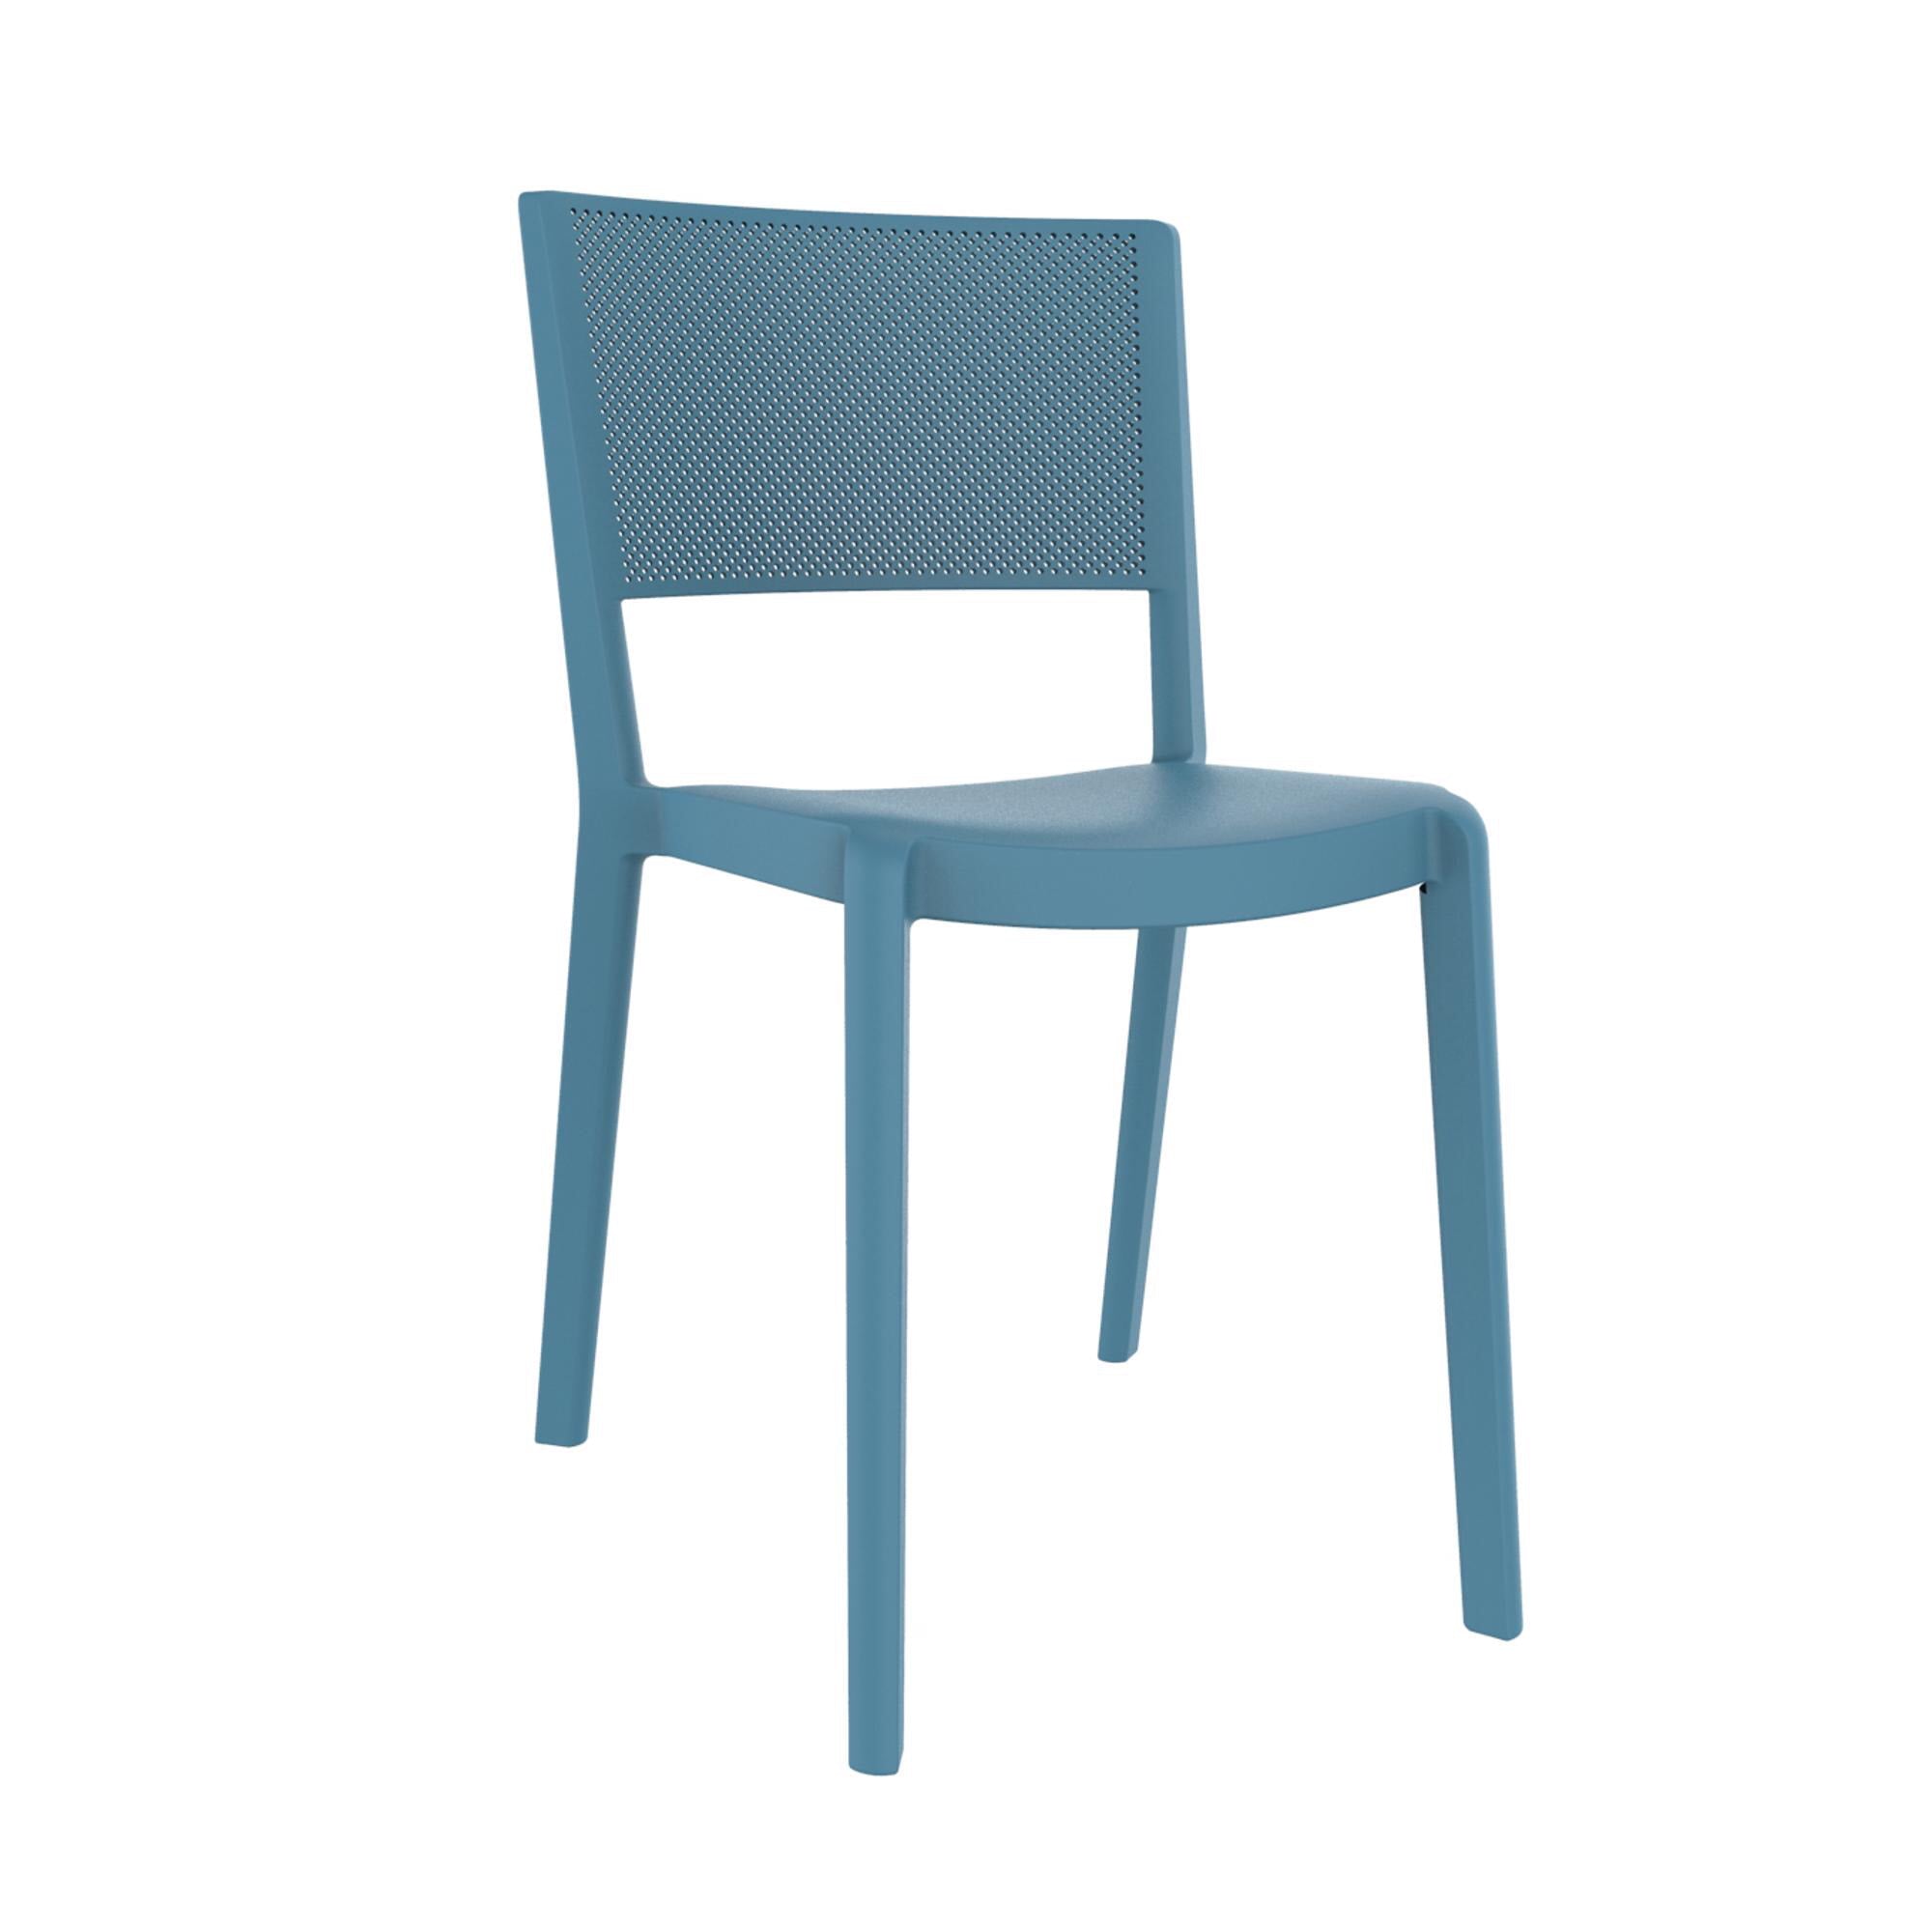 Resol spot chair inside, retro blue outside